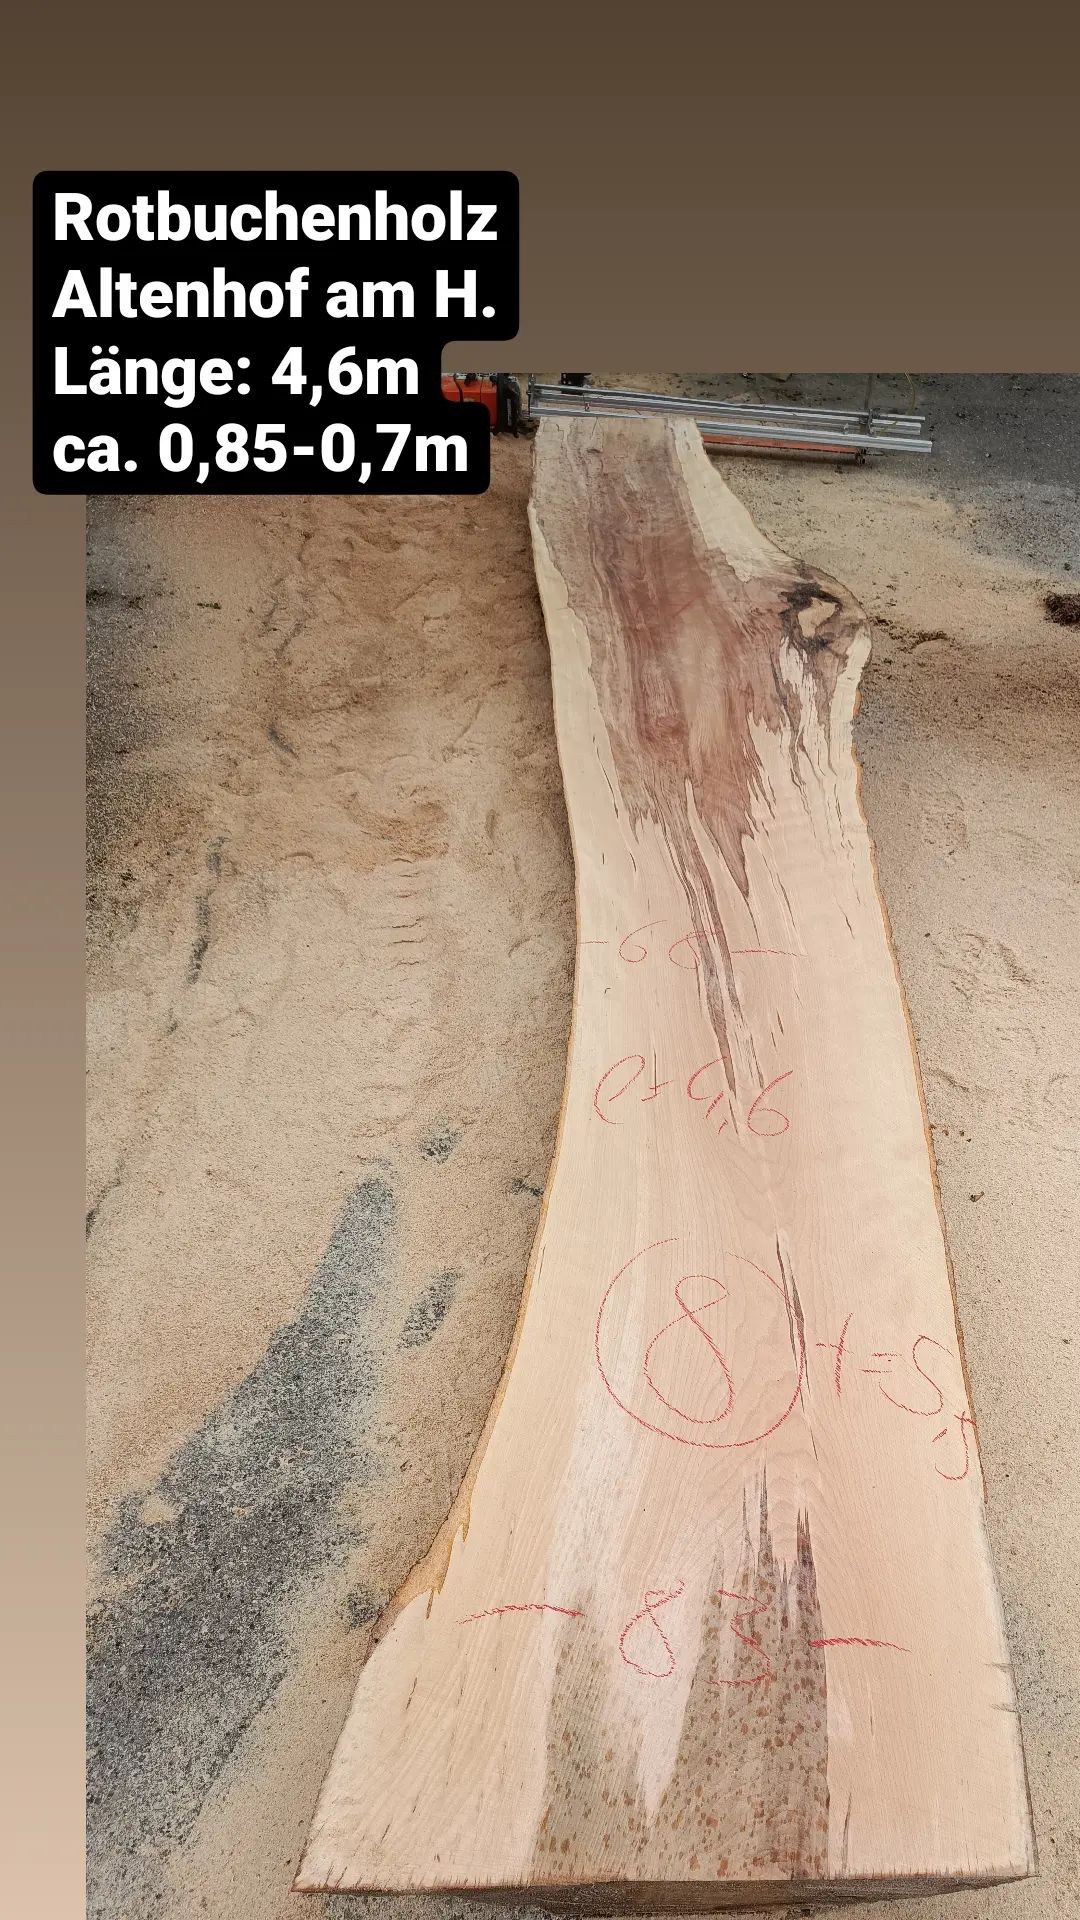 Tischplattenrohling Esstisch ca.1,05-0,7m L=4,6m Rotbuchenholz aus Altenhof am Hausruck